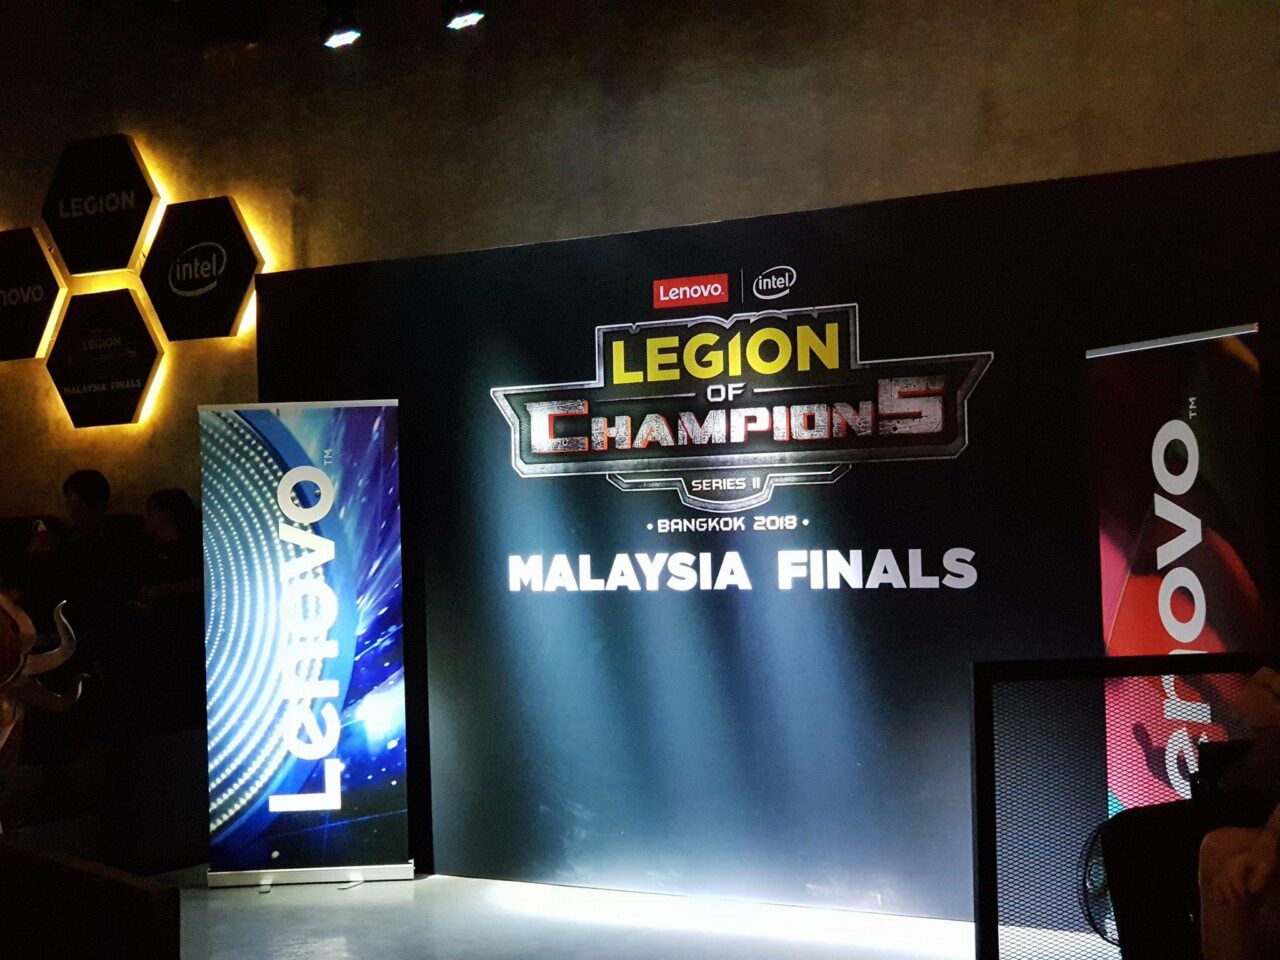 League Of Champions Series II选出League of Legends最强大马代表，前往曼谷角逐国际冠军宝座！